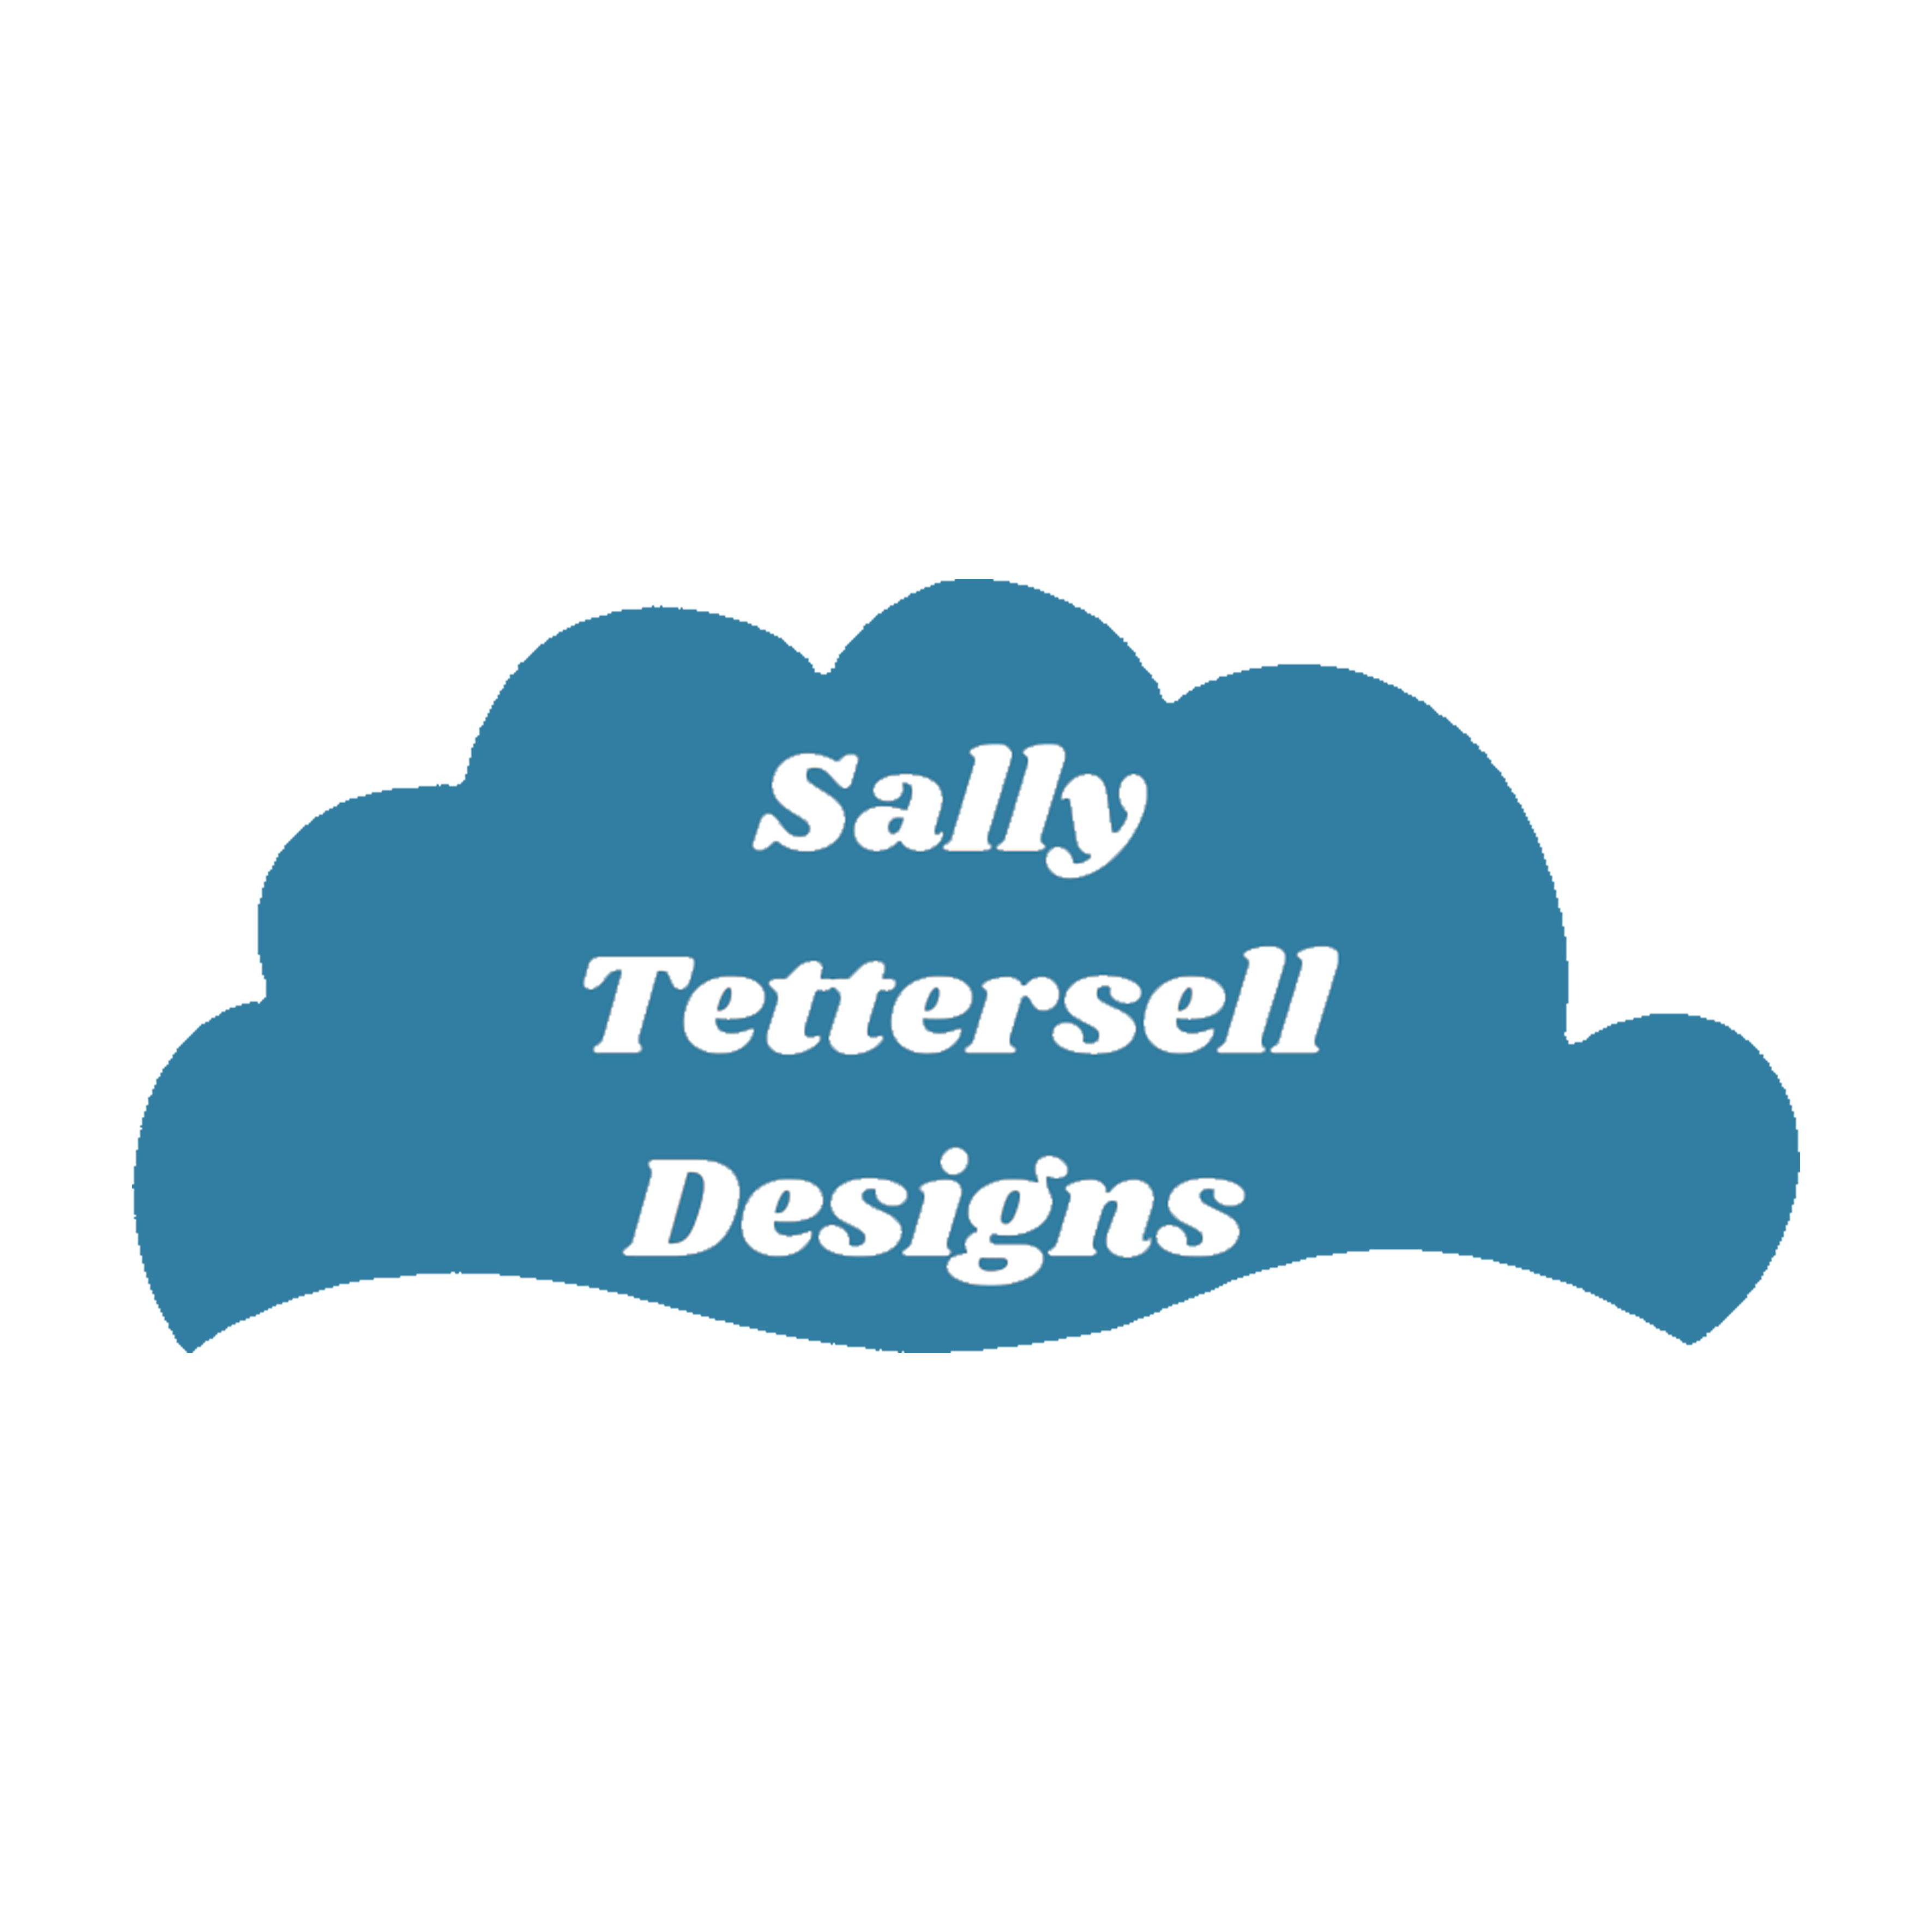 Sally Tettersell Designs